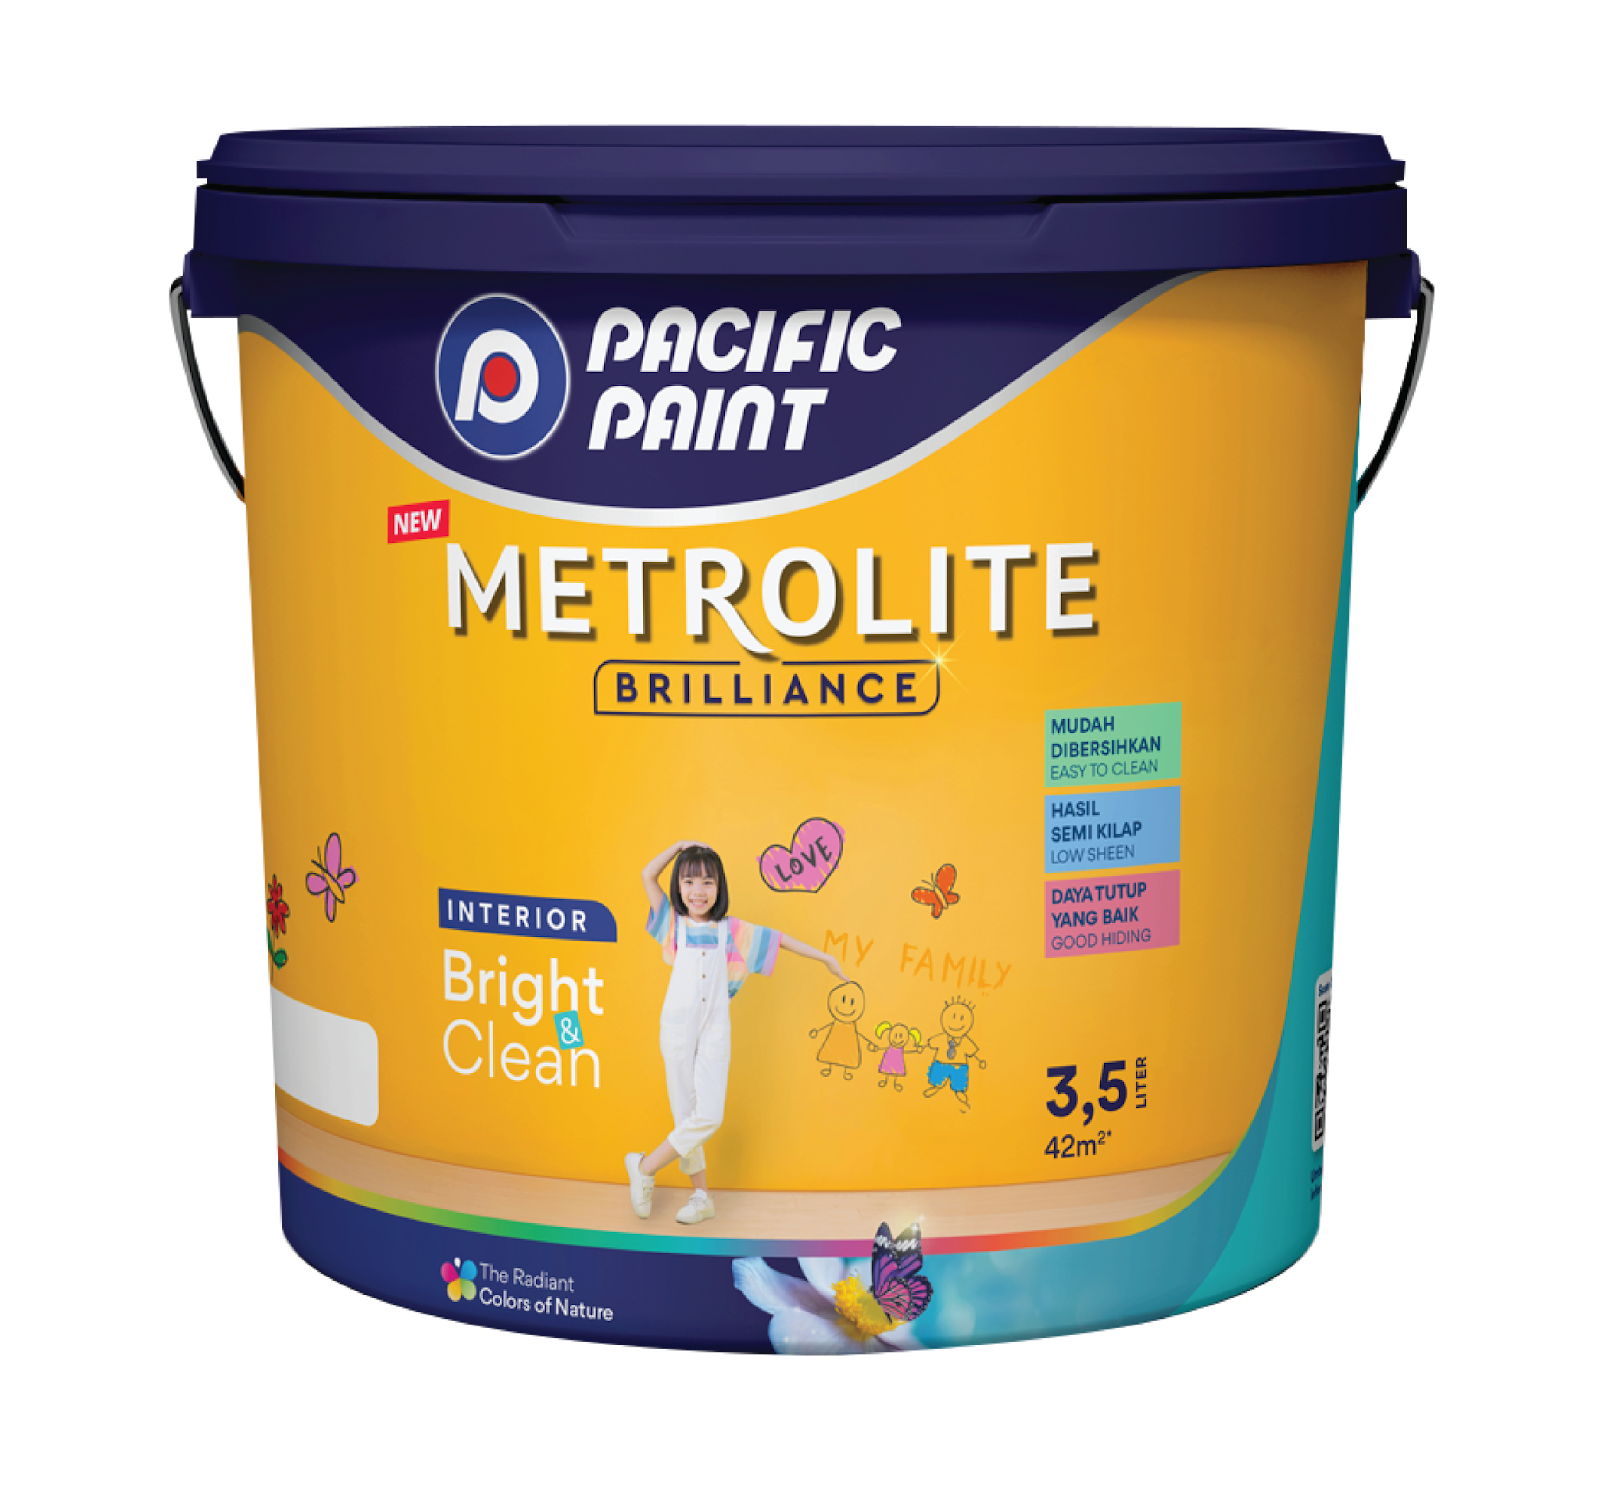 Pacific Paint Metrolite Brilliance Bright & Clean